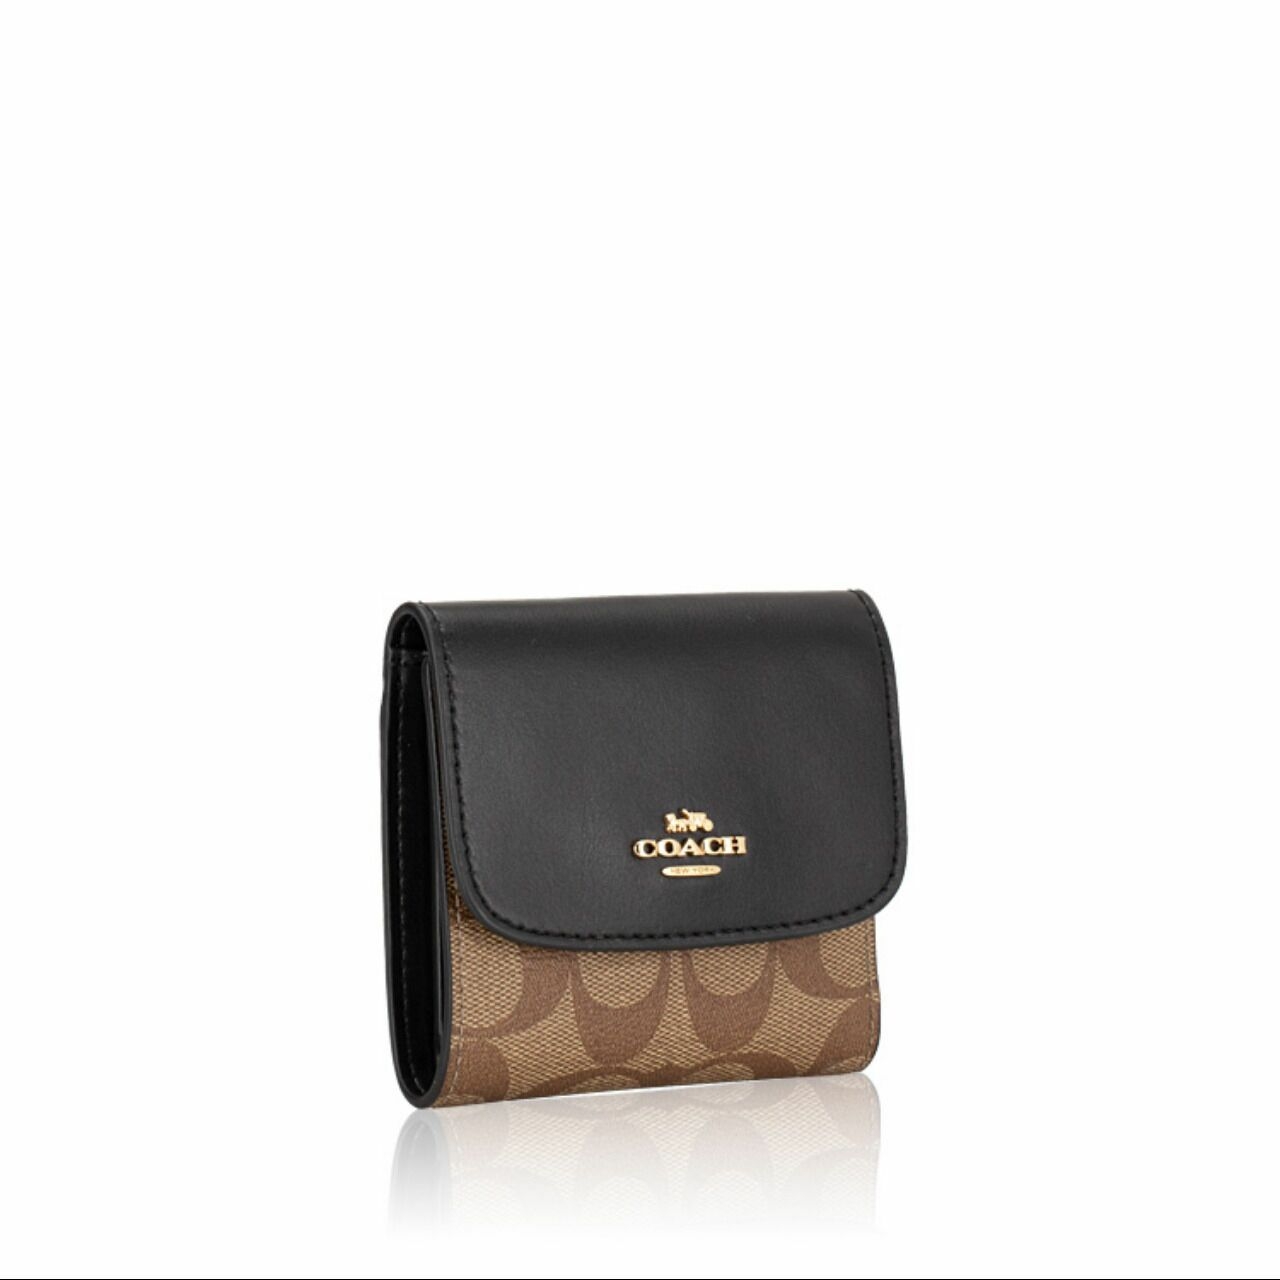 Coach 87589 Signature Soft Leather Small Wallet Khaki Black